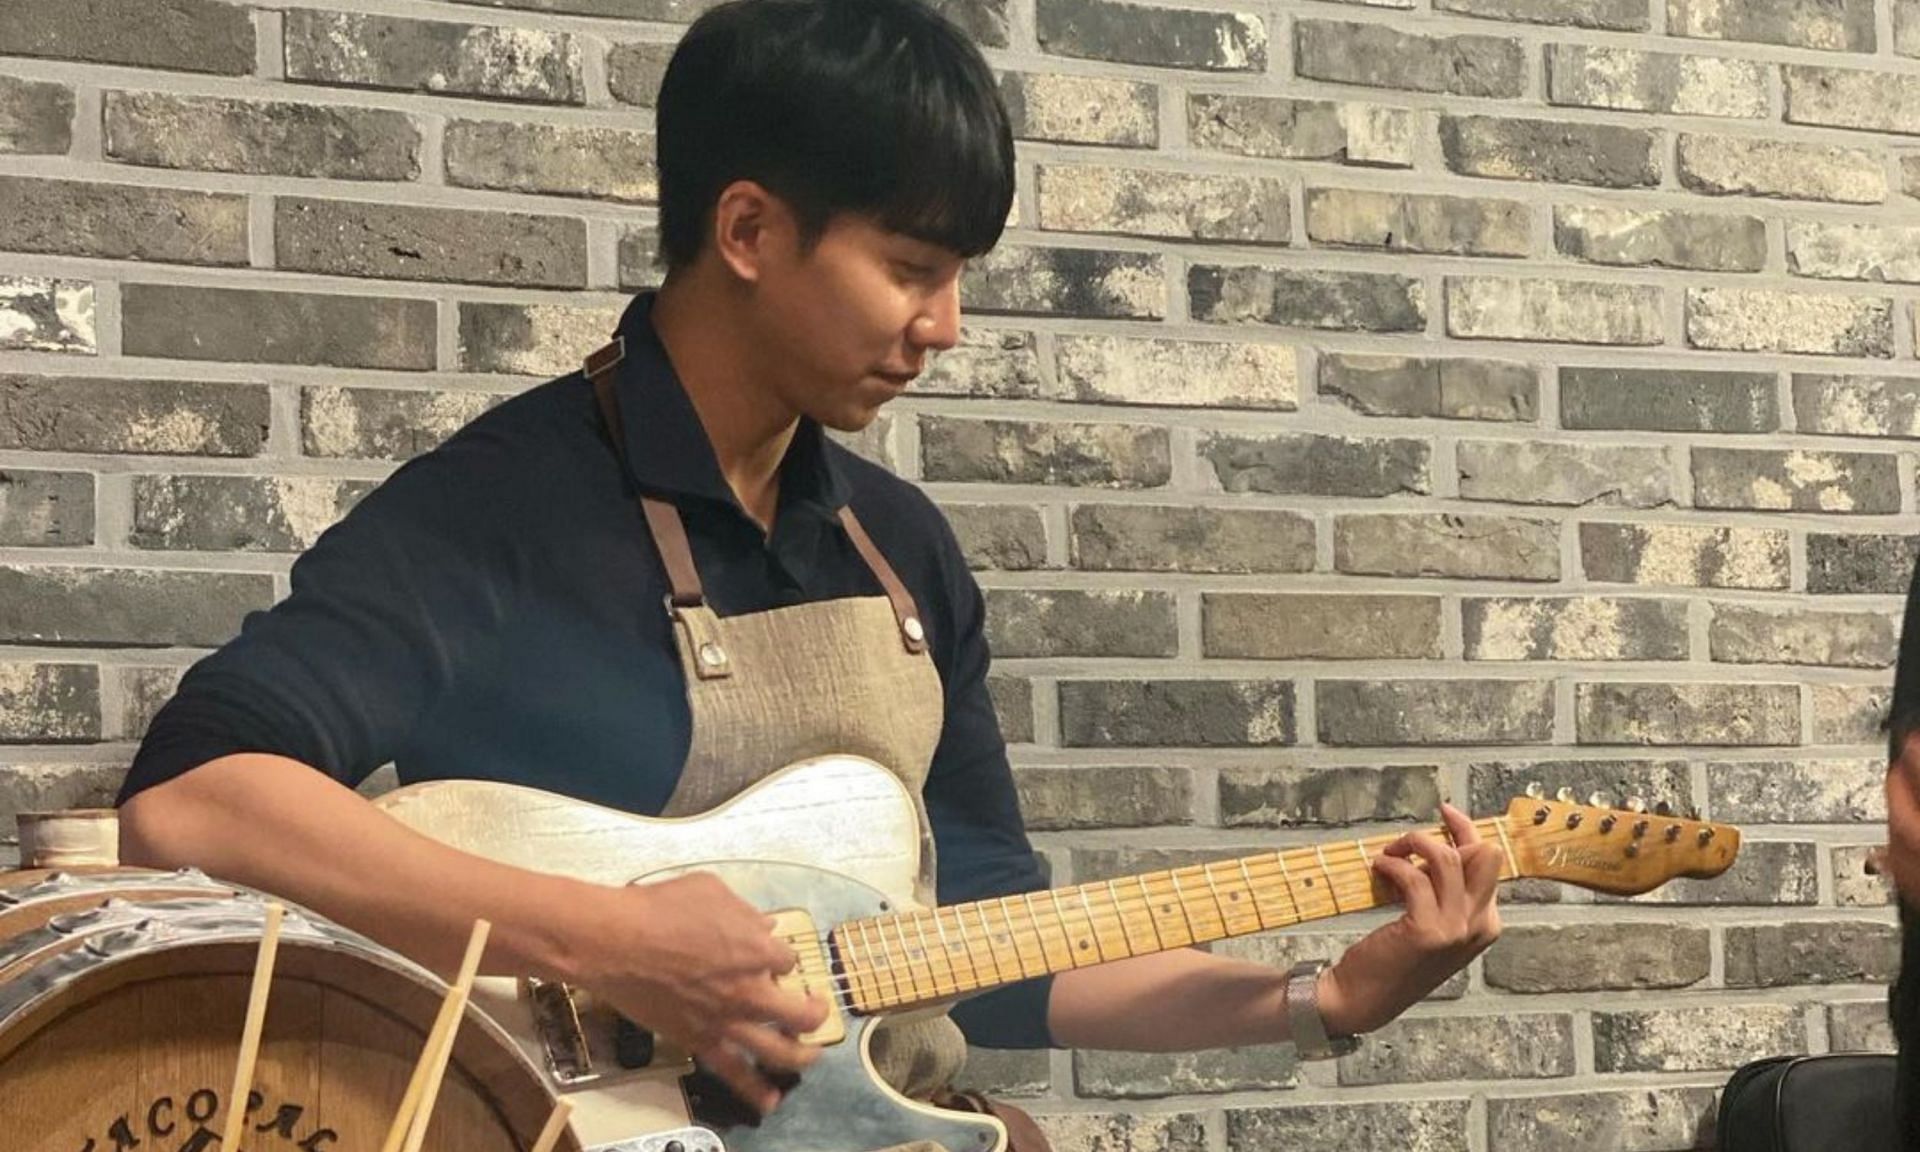 A still of Lee Seung-gi (Image via leeseunggi.official/Instagram)